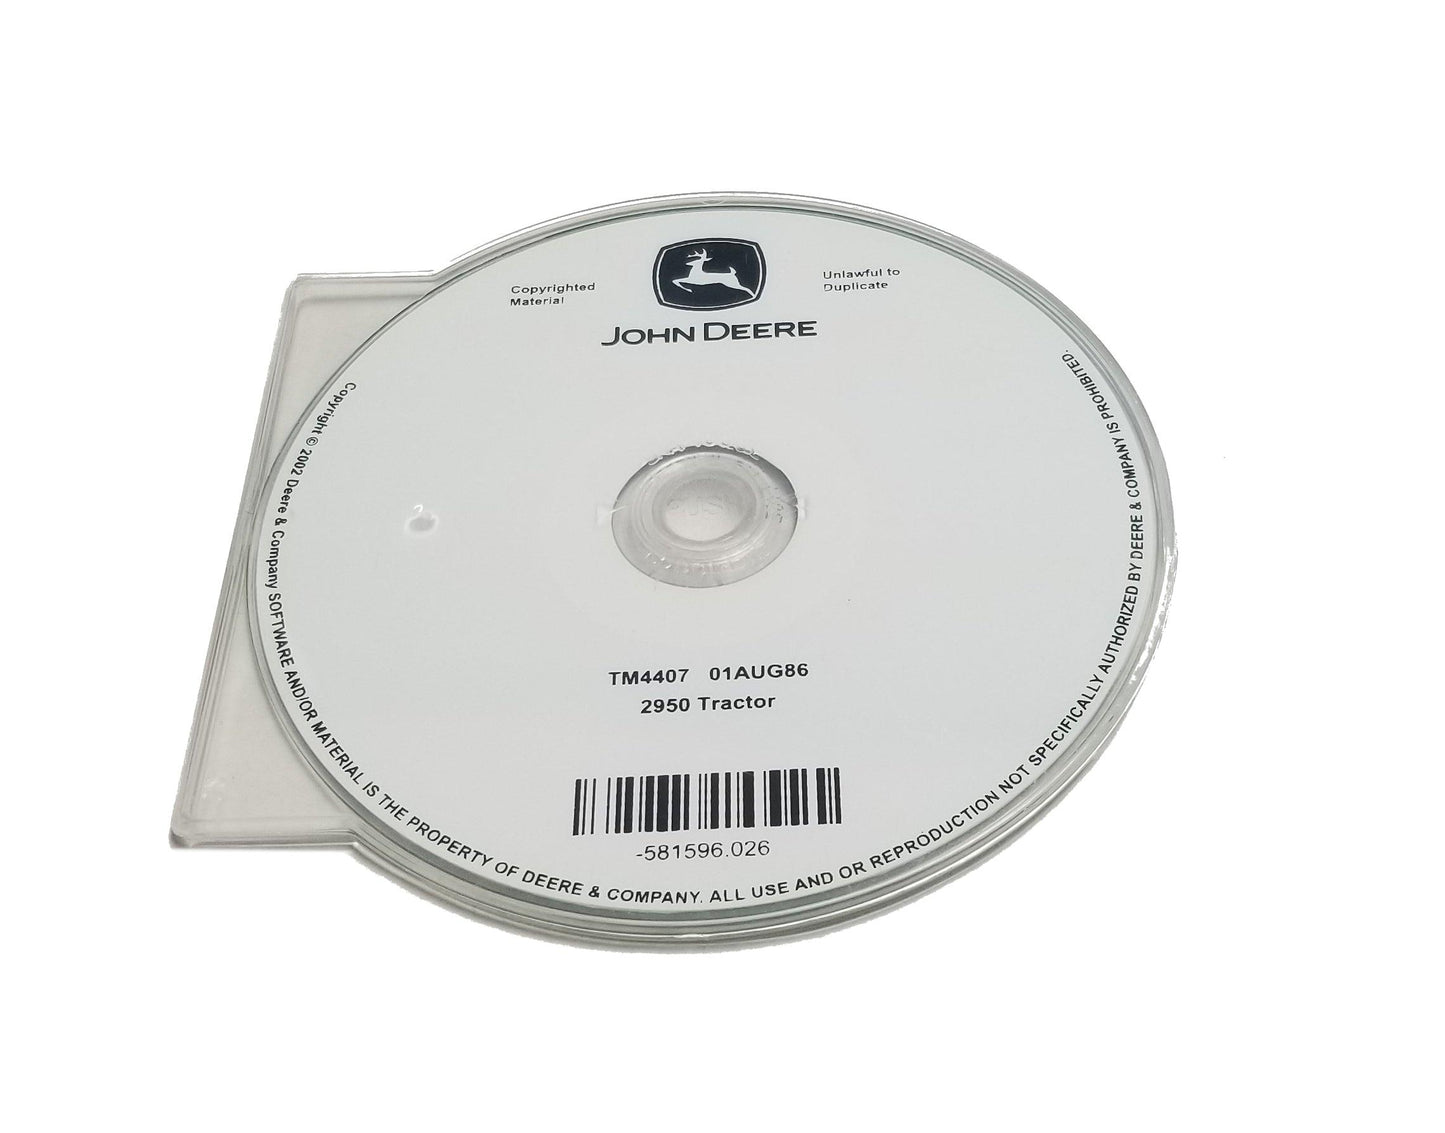 John Deere 2950 Tractor Technical CD Manual - TM4407CD